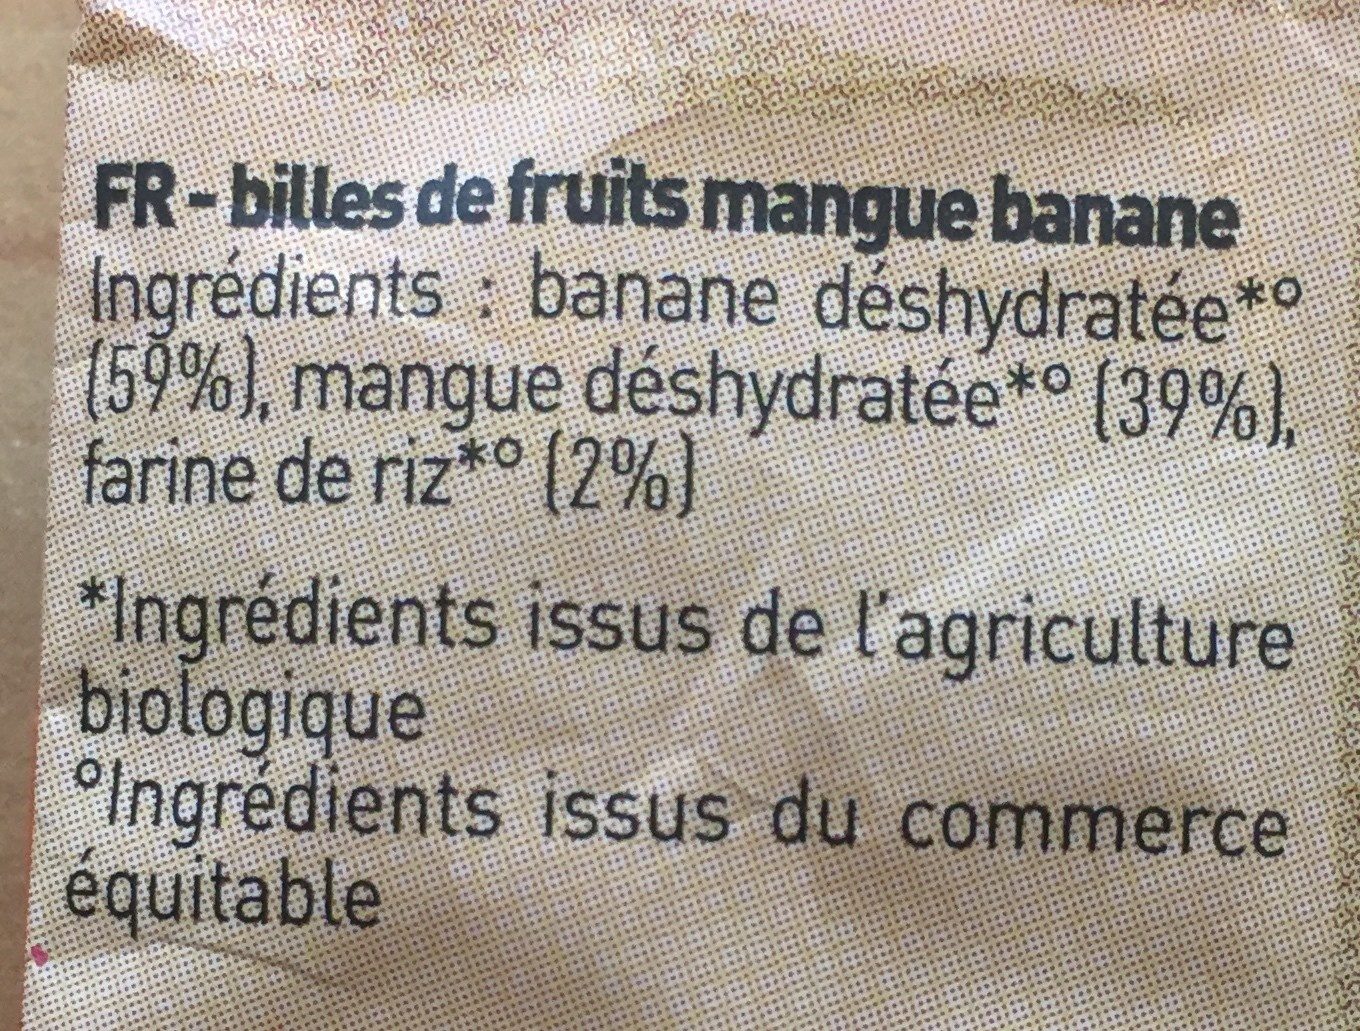 Billes de fruits banane mangue - Ingredients - fr